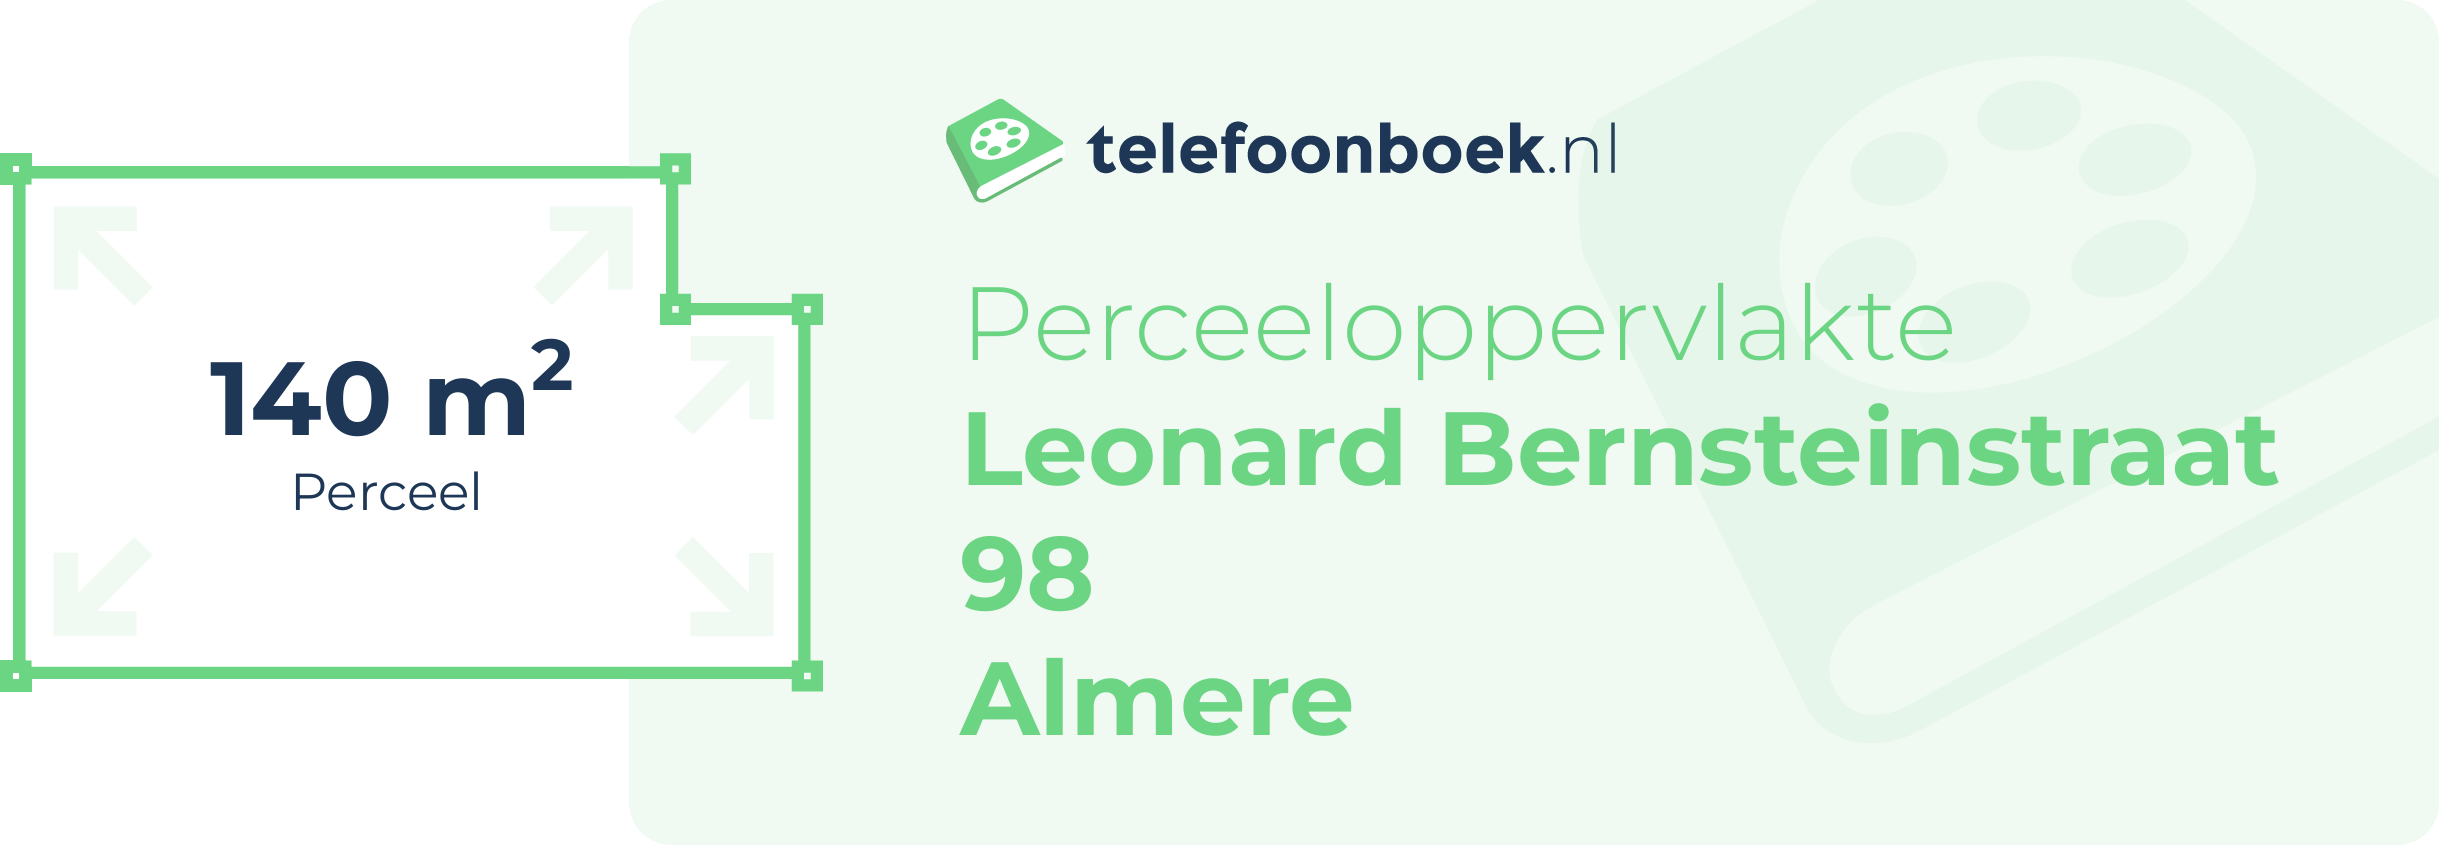 Perceeloppervlakte Leonard Bernsteinstraat 98 Almere